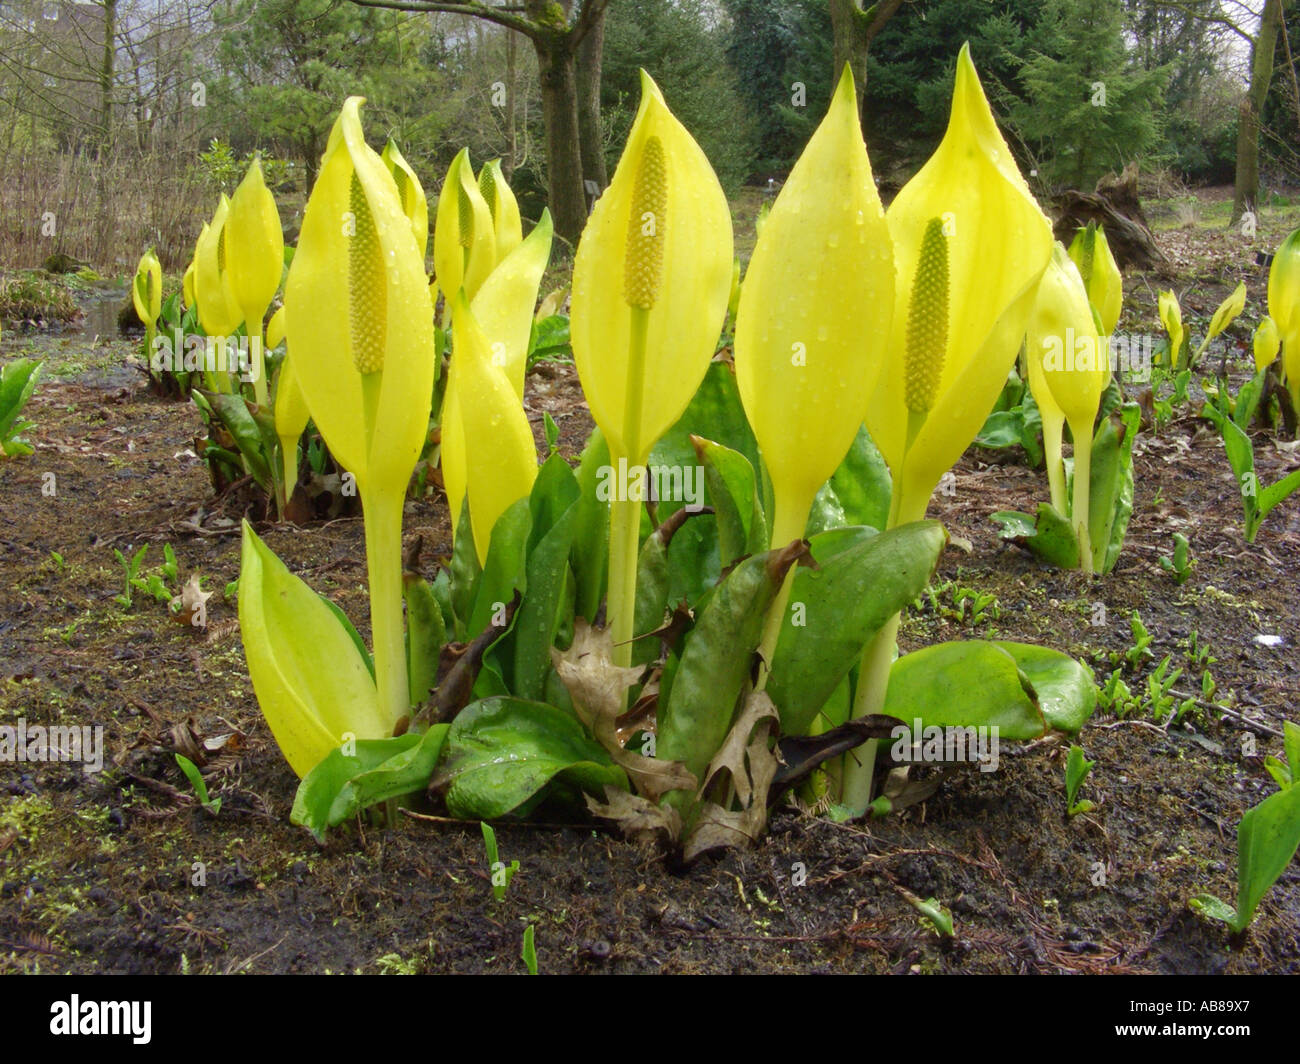 skunk cabbage, swamp lantern, yellow arum, yellow skunk cabbage (Lysichiton americanus), group of plants Stock Photo